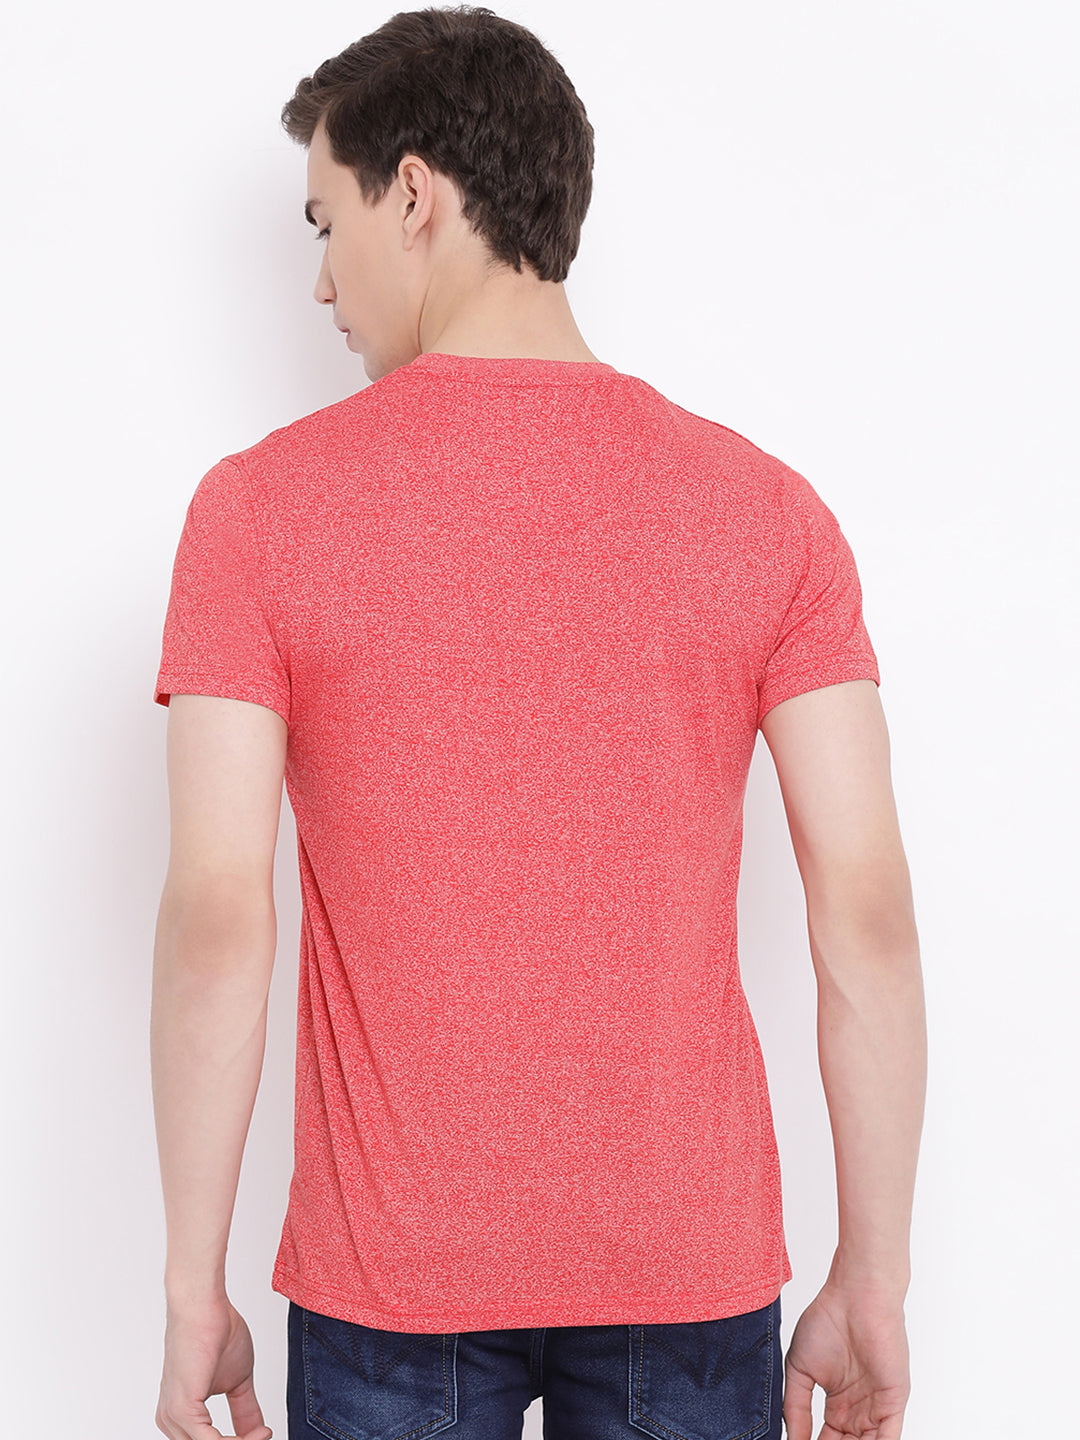 Red Printed T-Shirt - Men T-Shirts